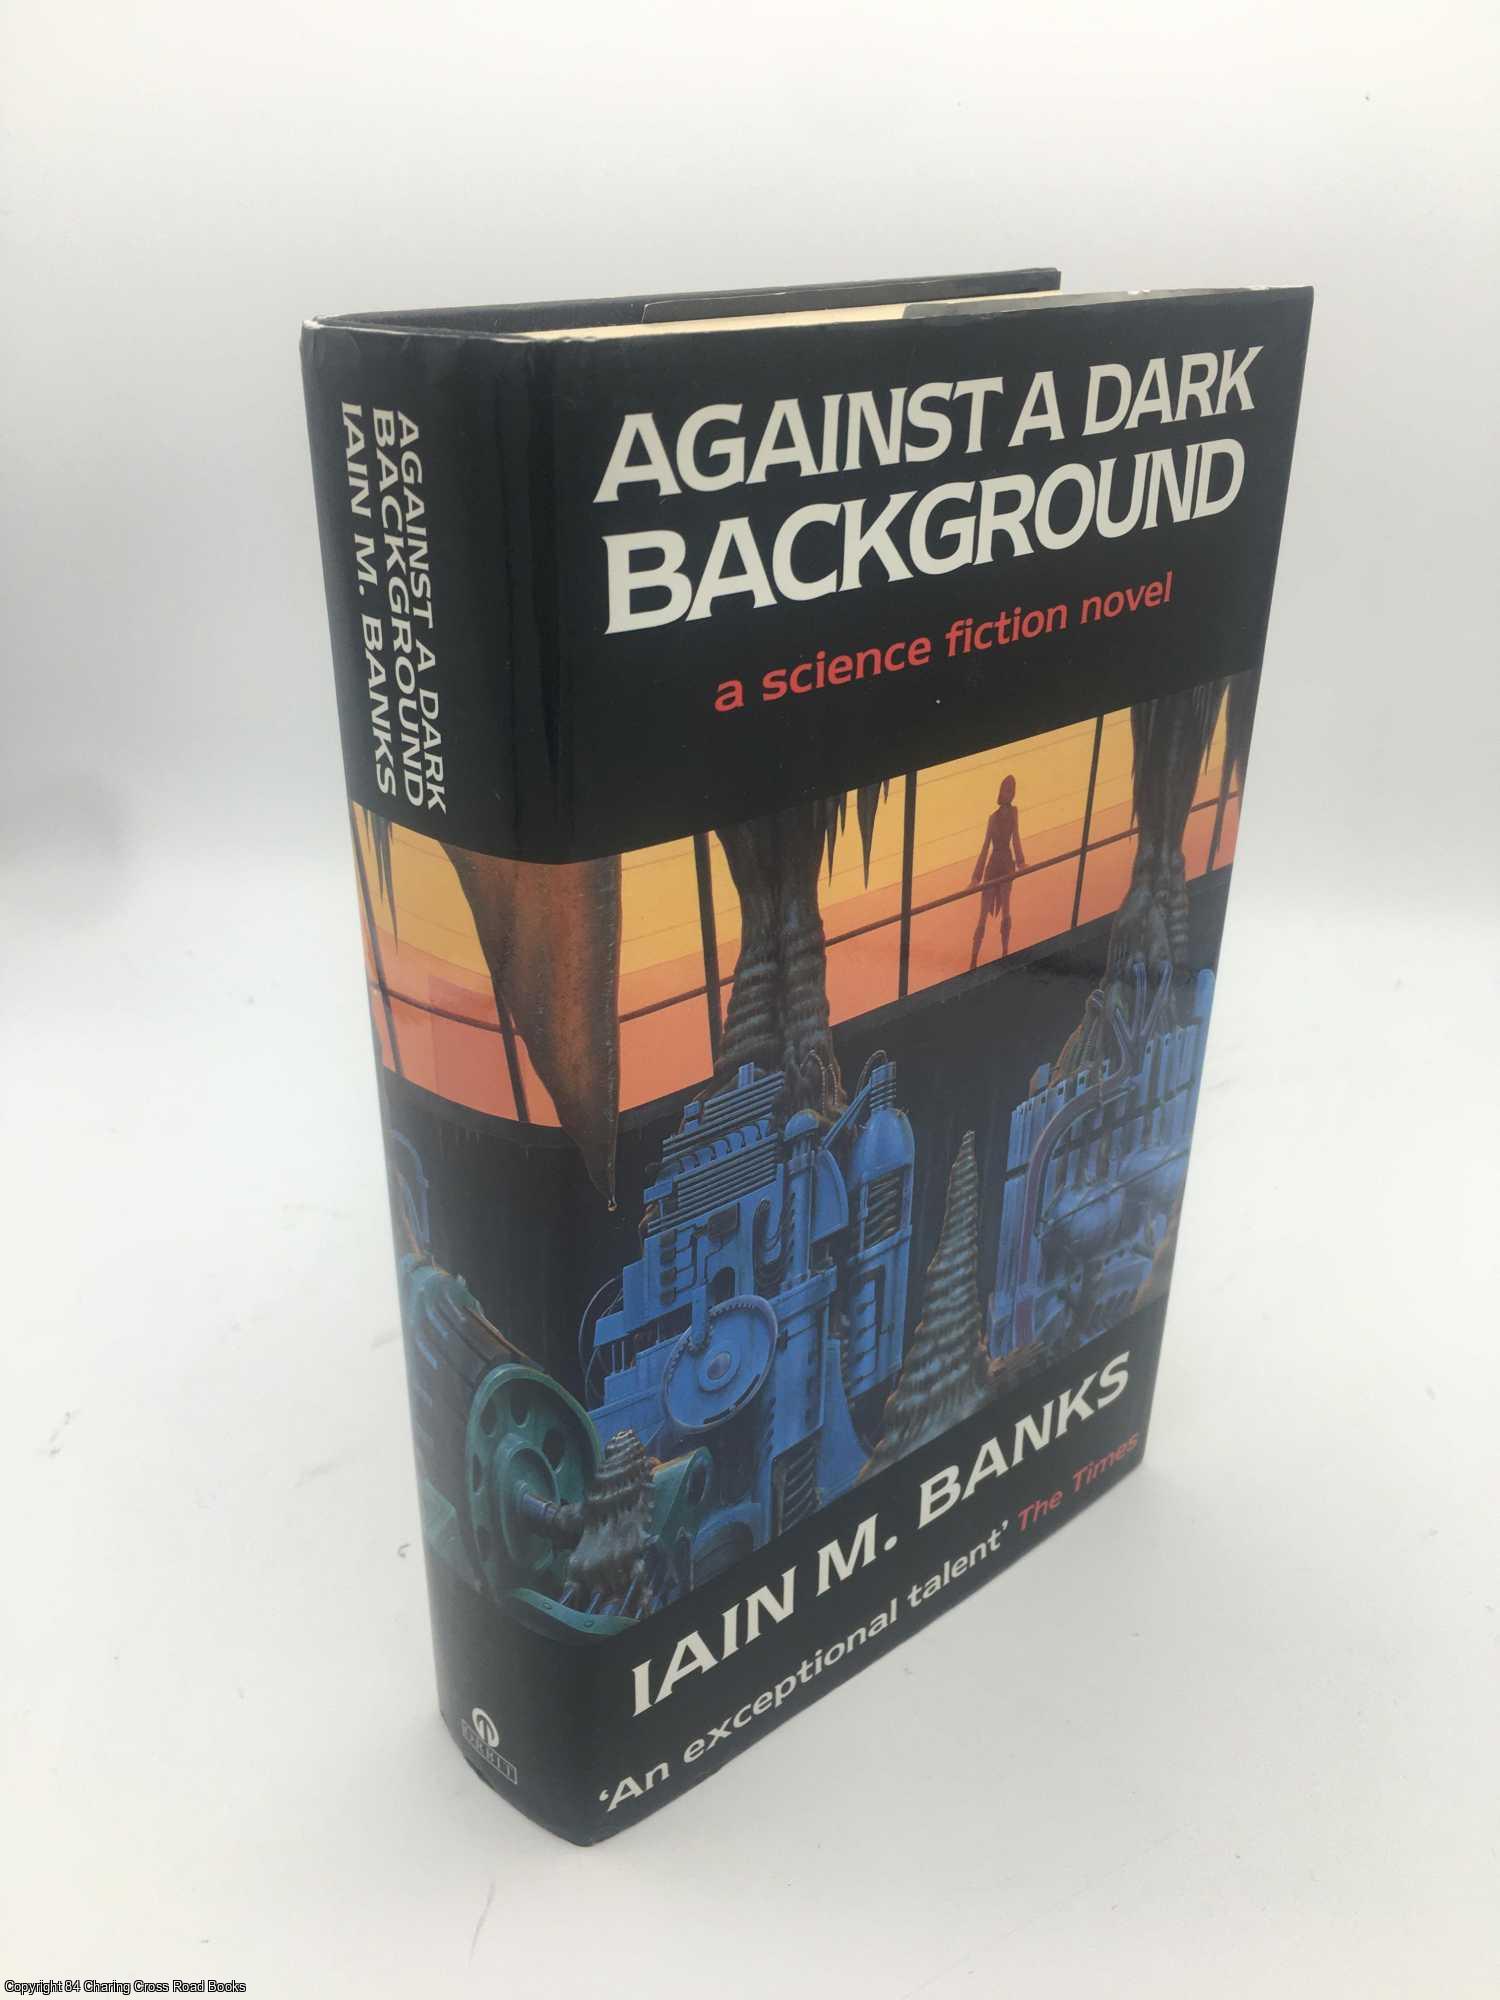 Banks, Iain M. - Against a Dark Background